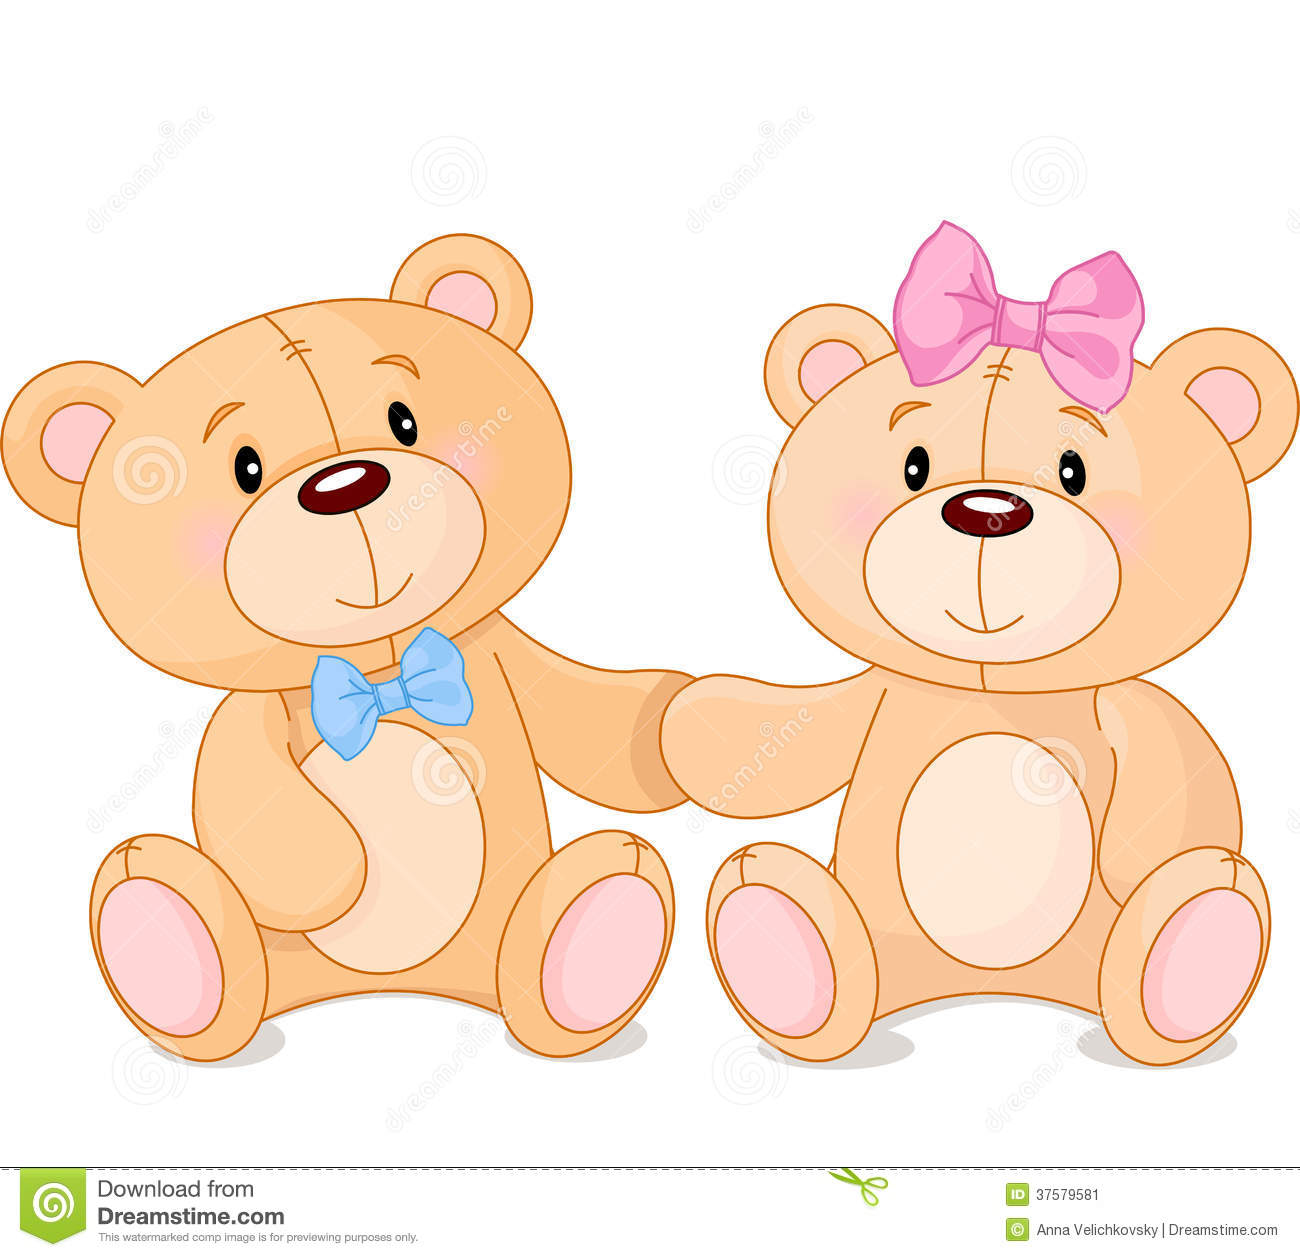 Teddy Bears In Love Stock Image   Image  37579581